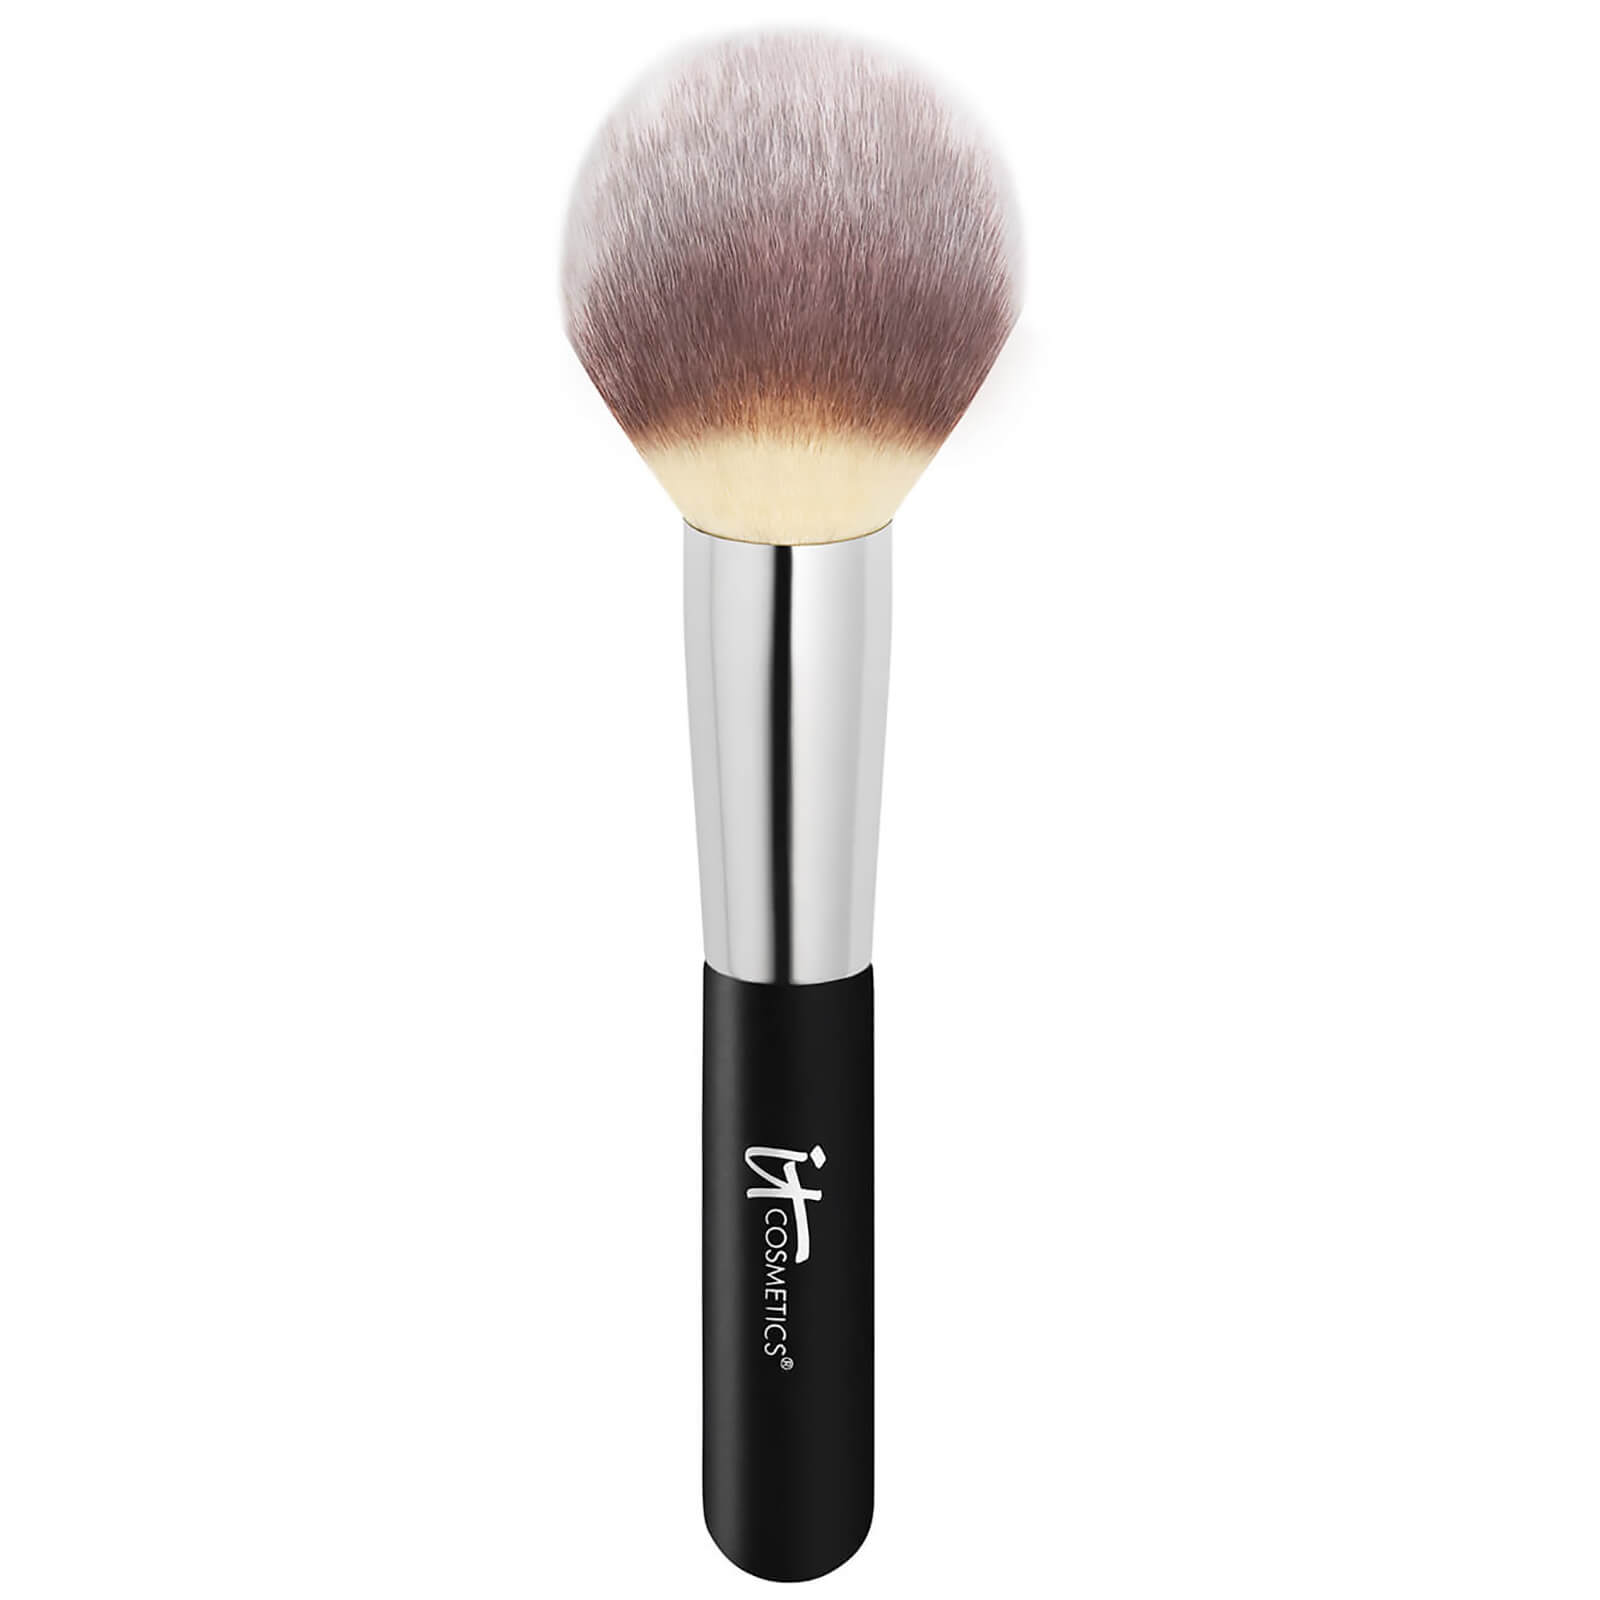 Image of IT Cosmetics Heavenly Luxe Wand Ball Powder Brush #8